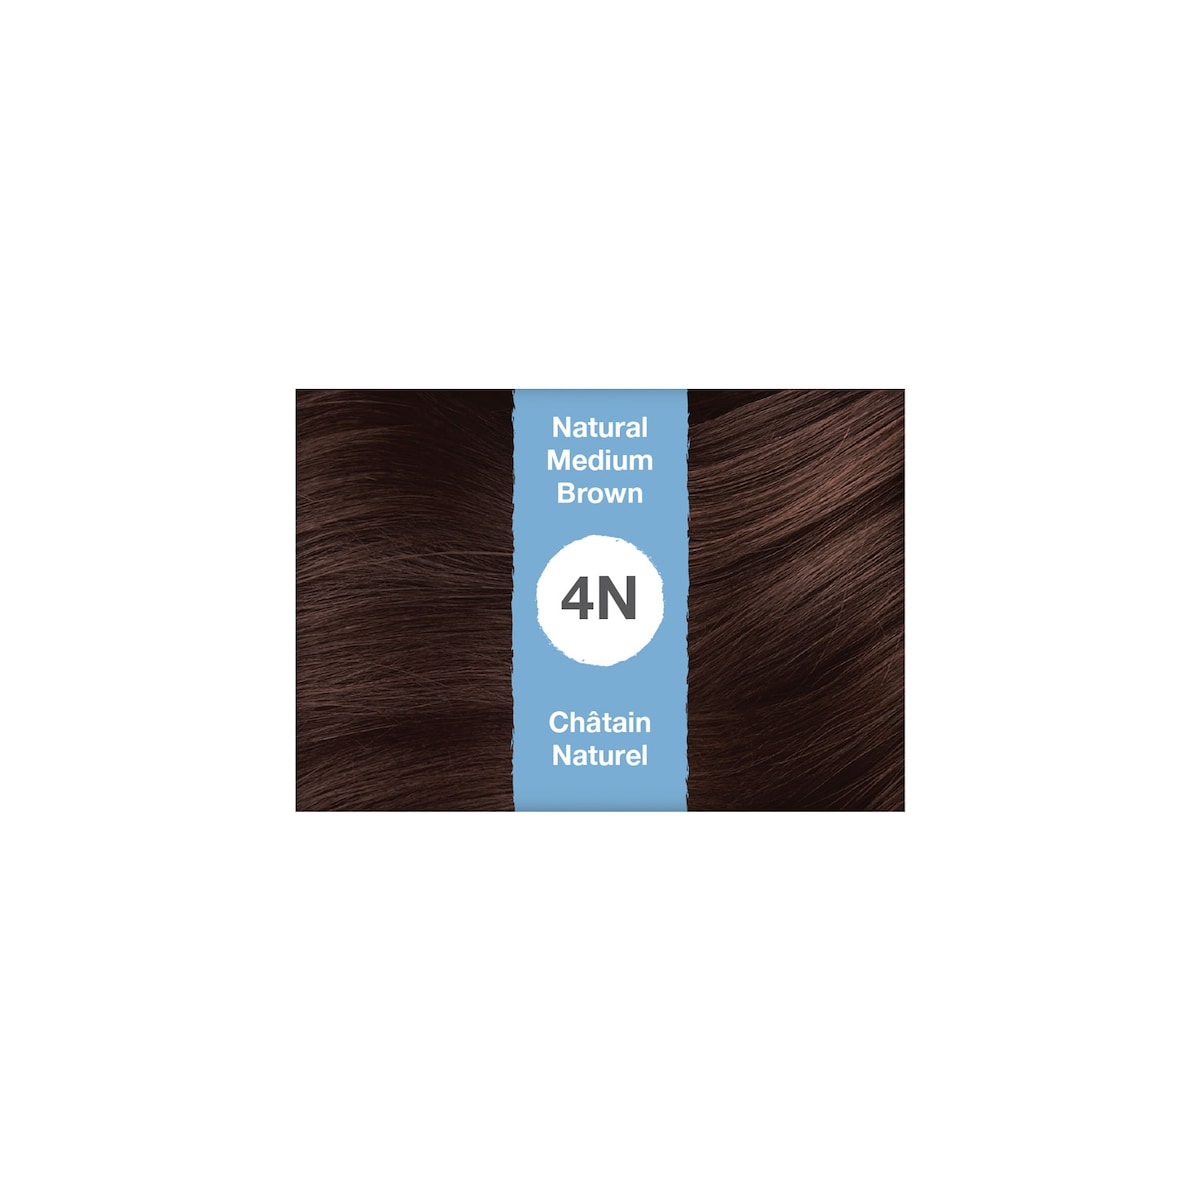 Tints of Nature 4N Natural Medium Brown Permanent Hair Colour 130ml